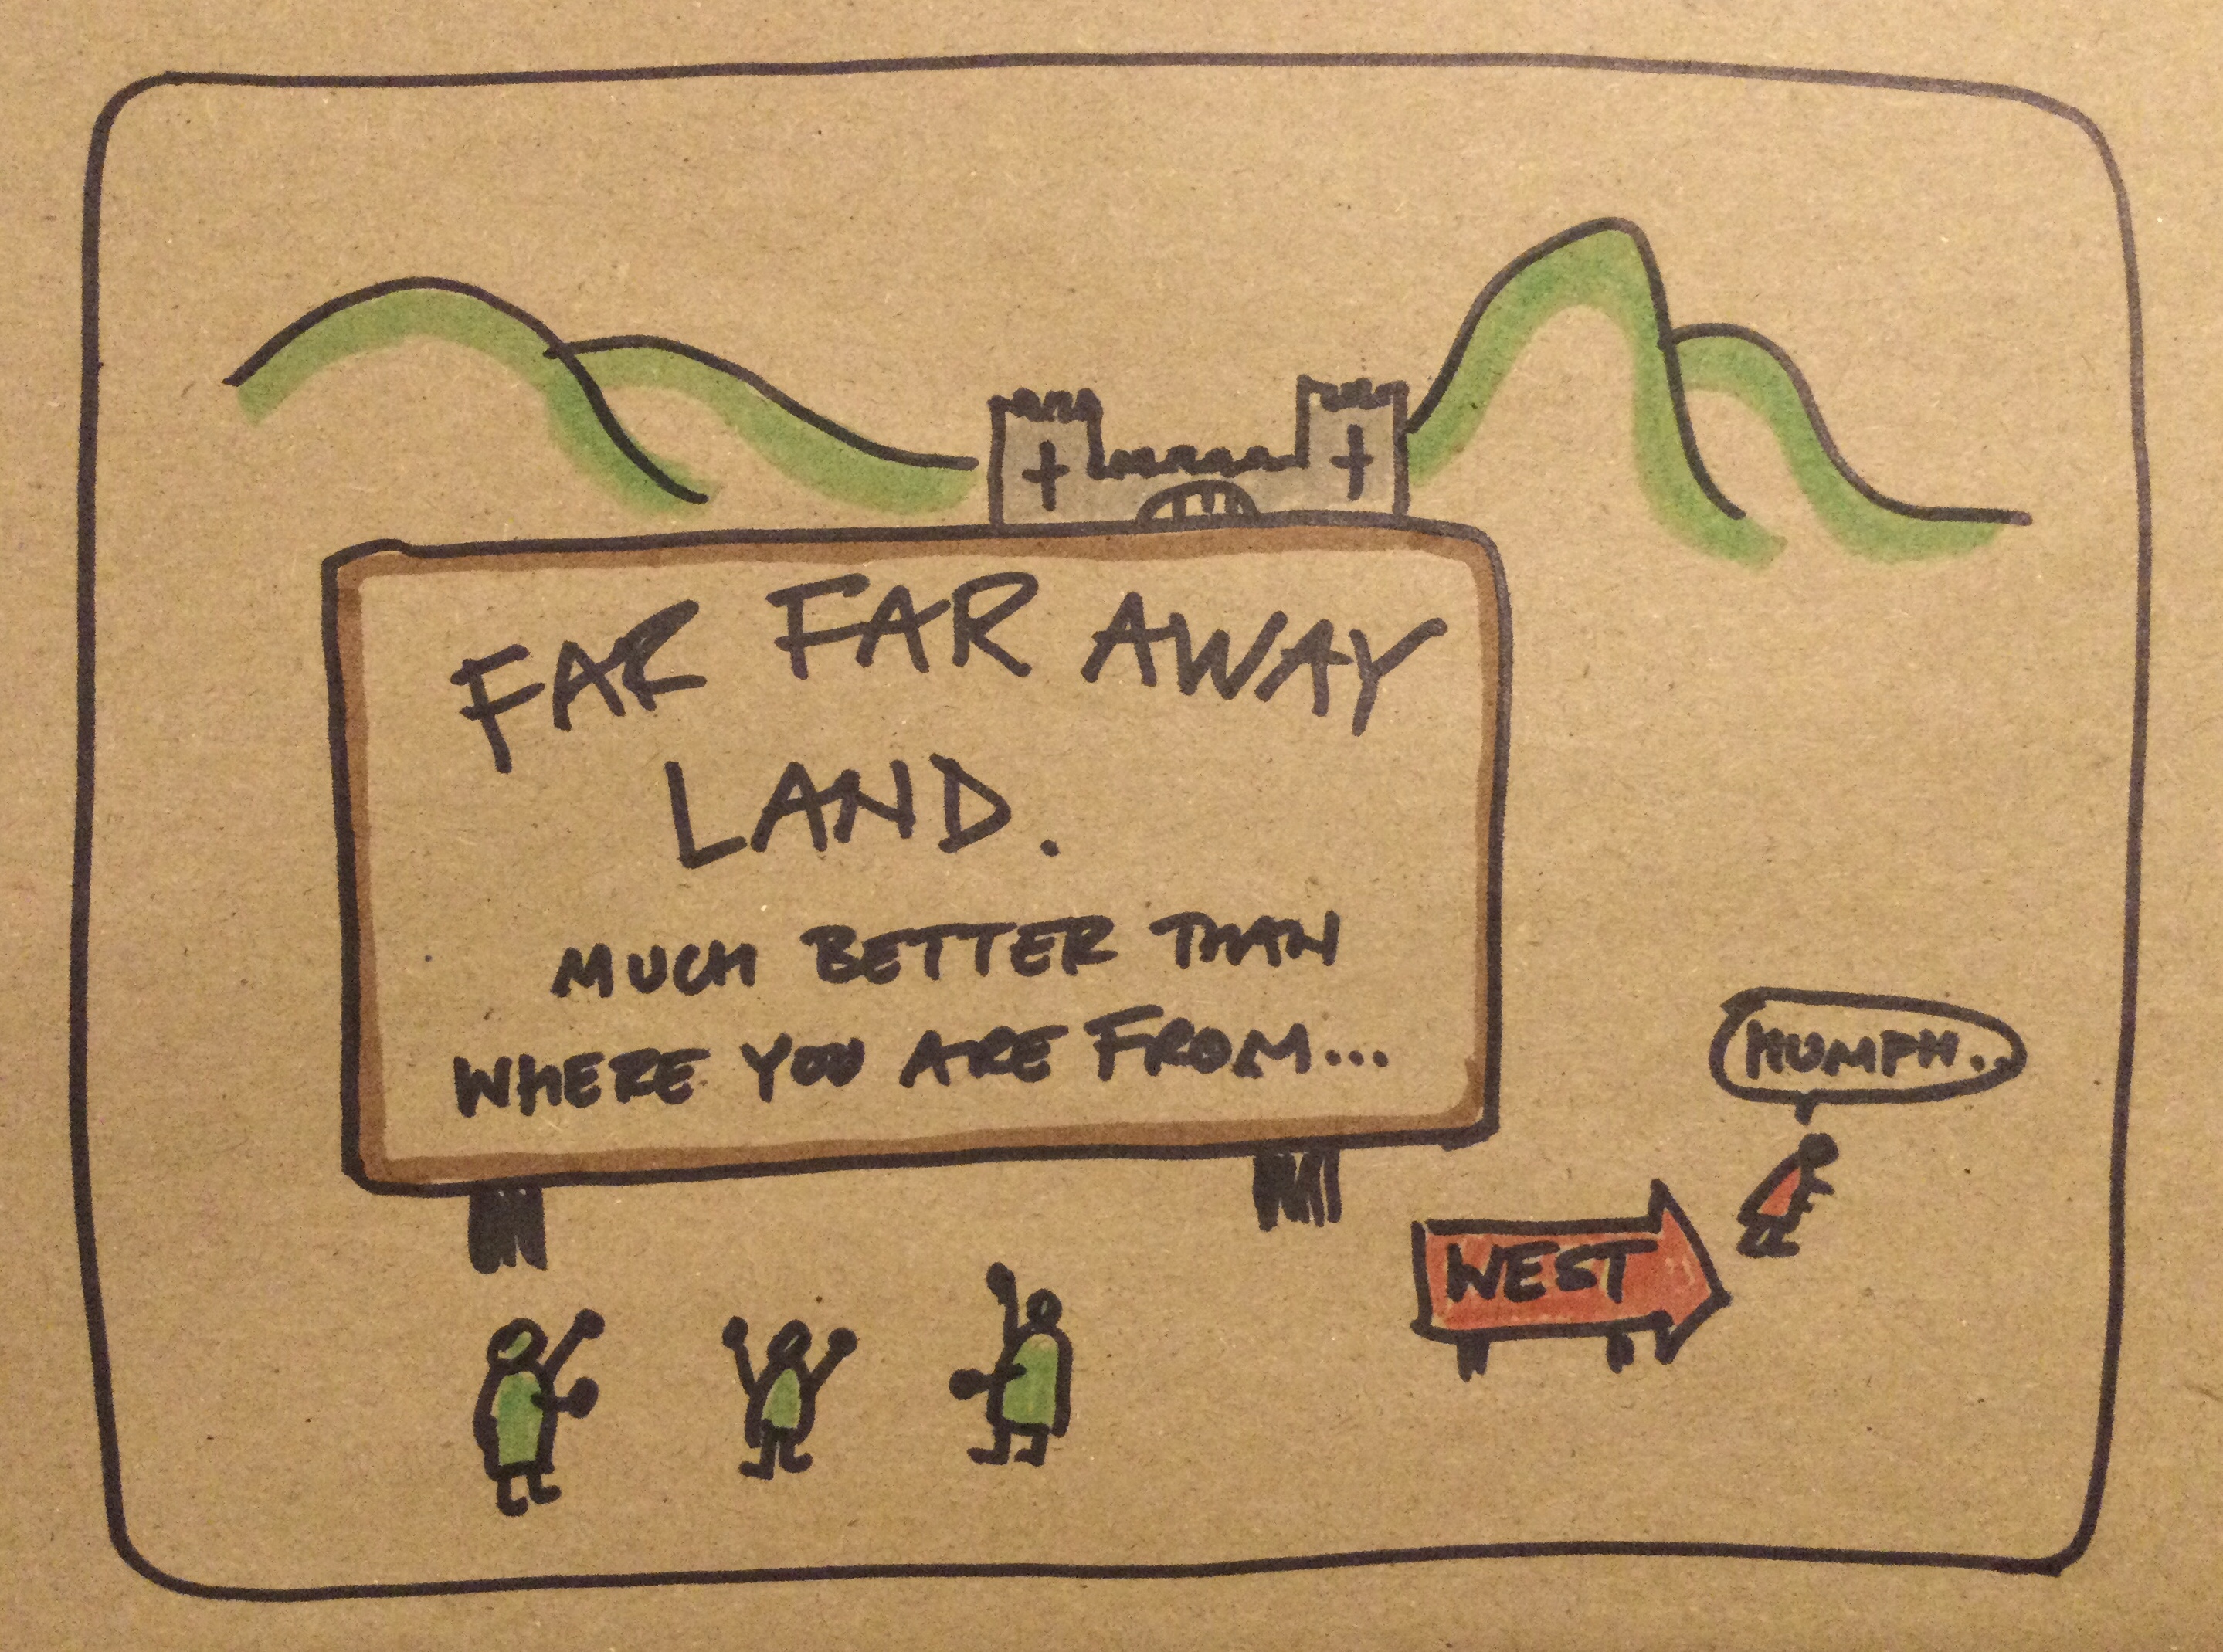 Far be it from me. Far far away Шрек. Far away Shrek. The Faraway Land.